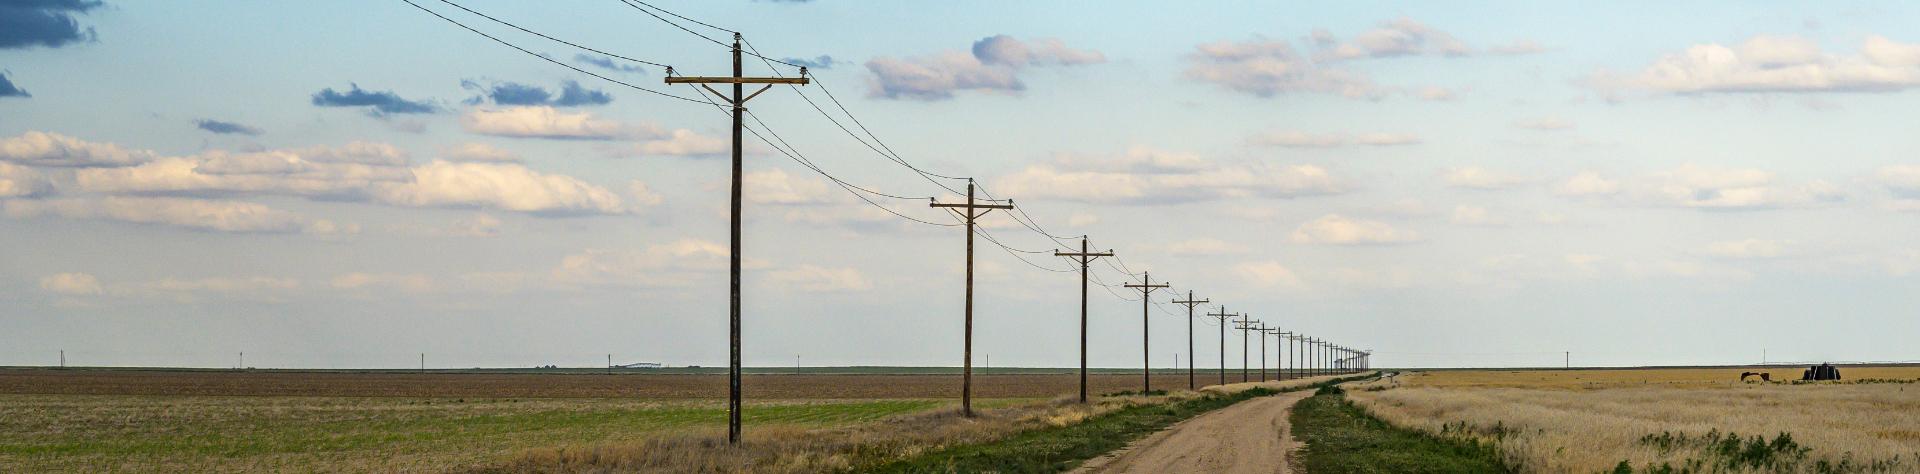 Telephone poles in rural area